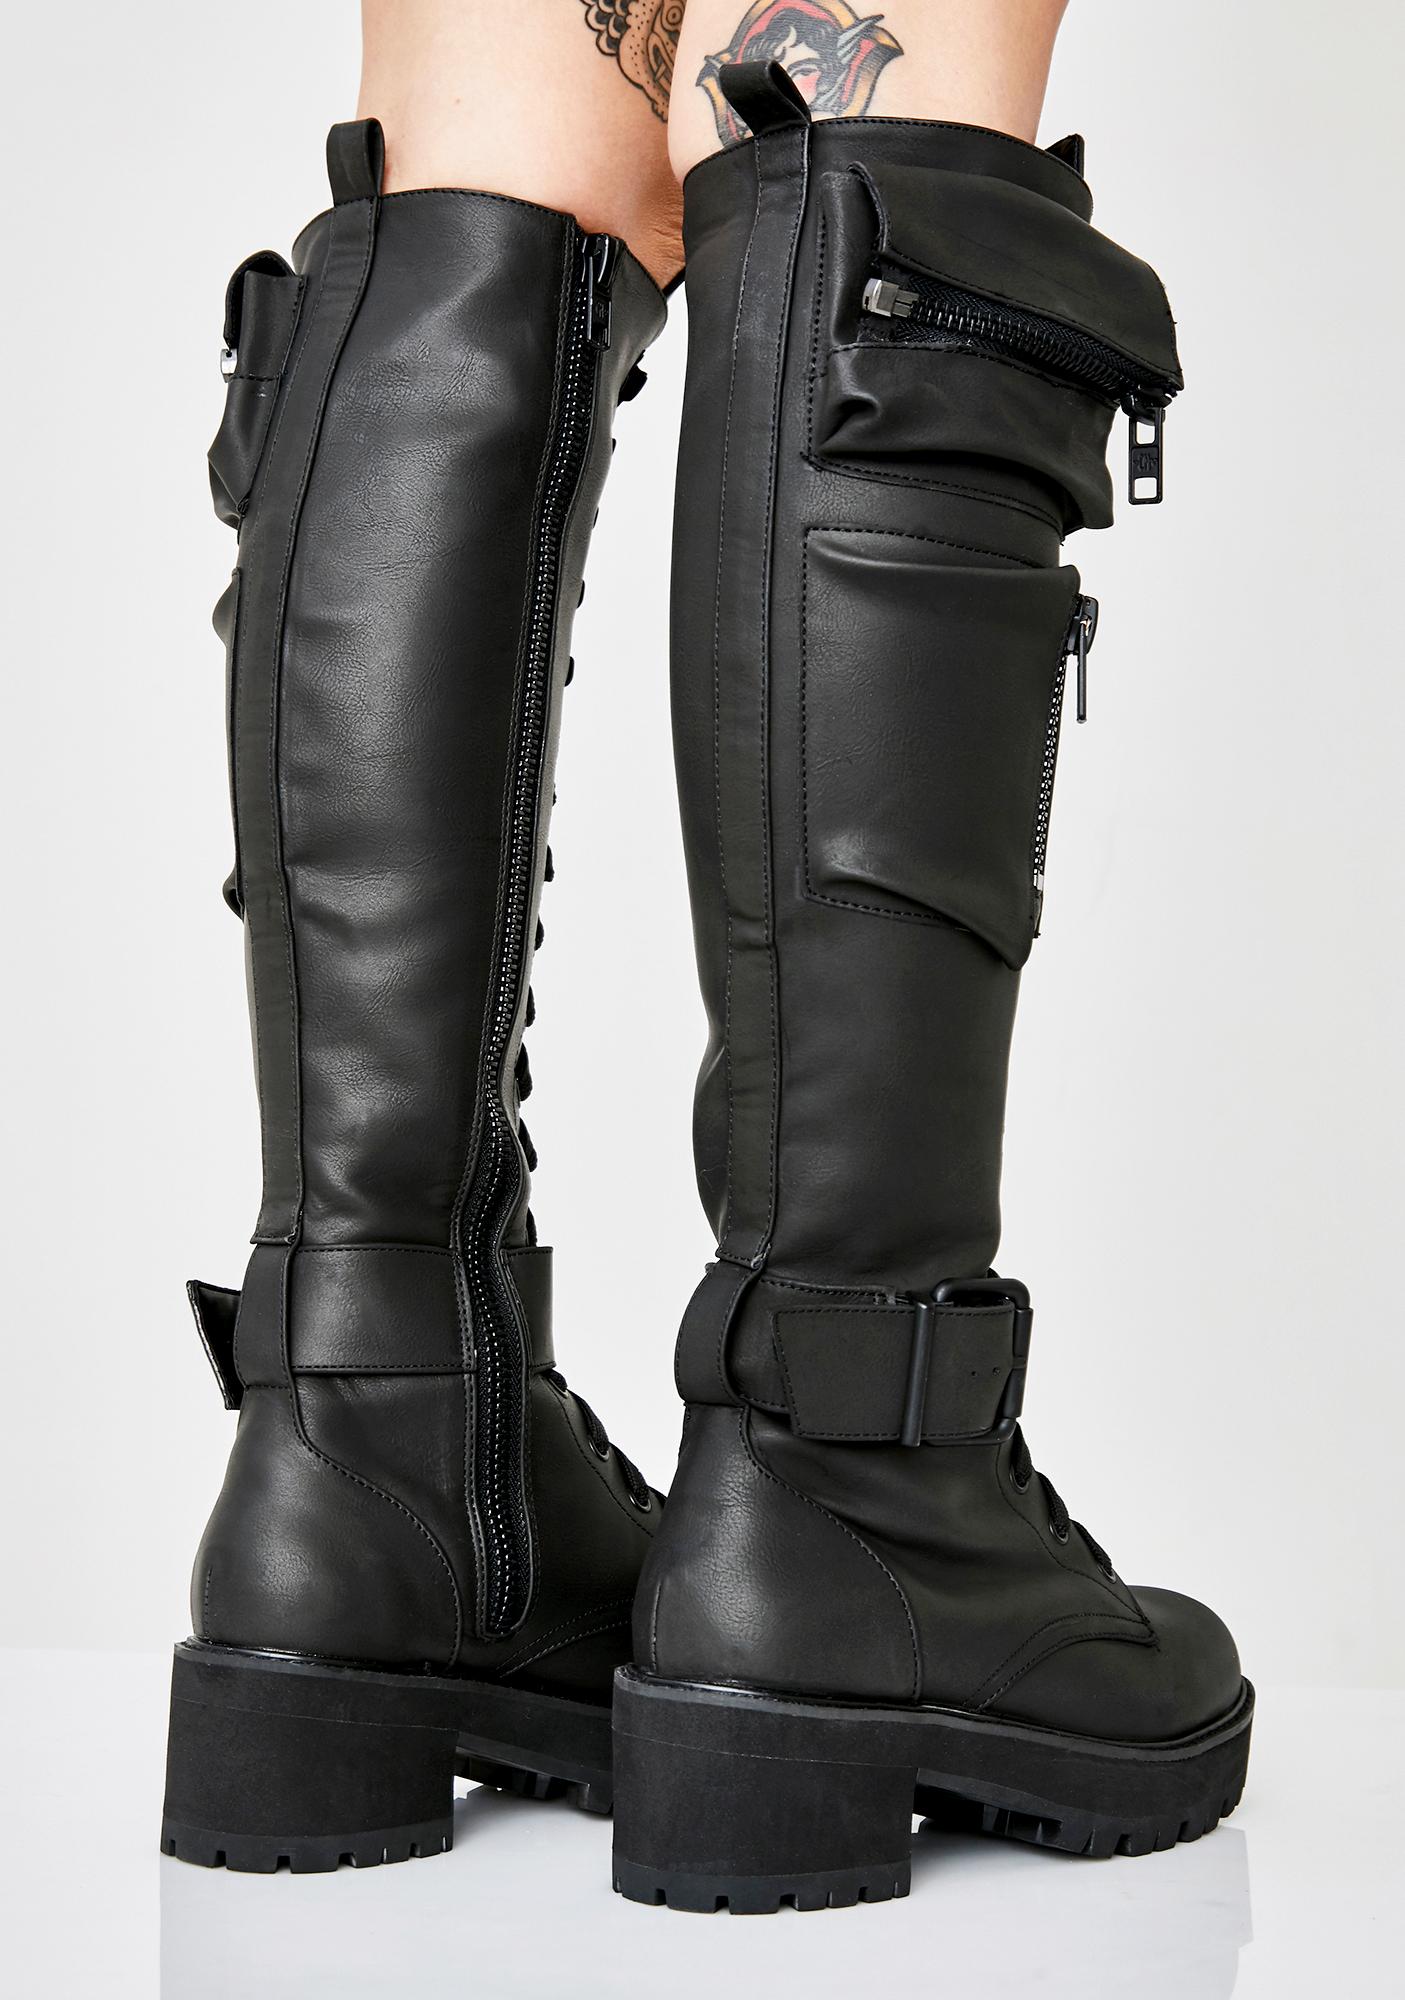 platform army boots